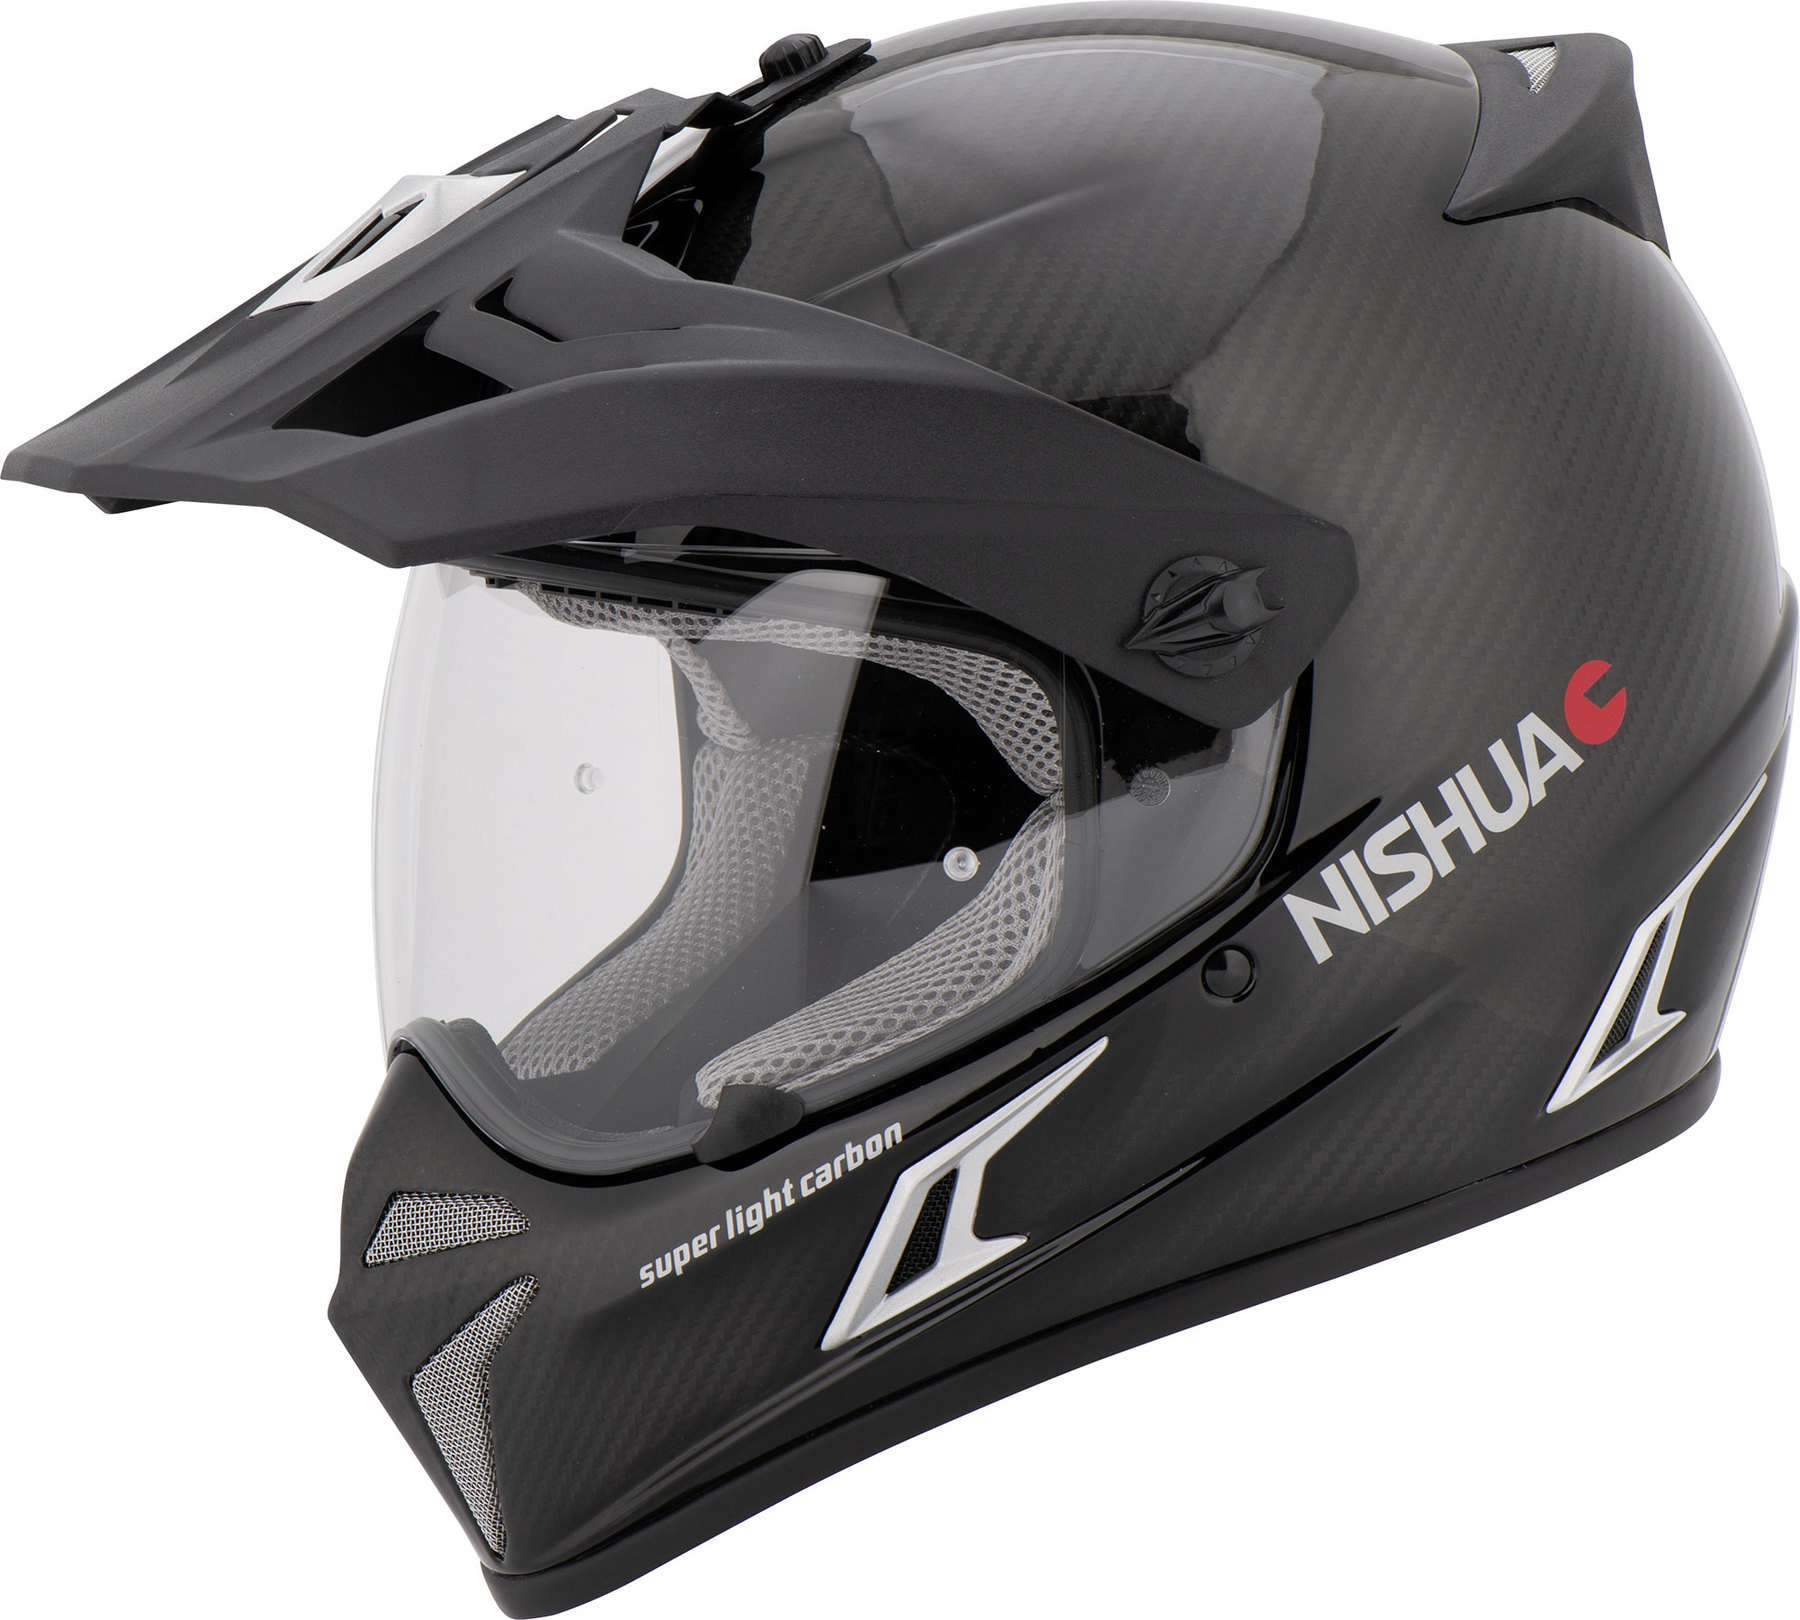 Buy Nishua Enduro Carbon Enduro Helmet | Louis motorcycle clothing and